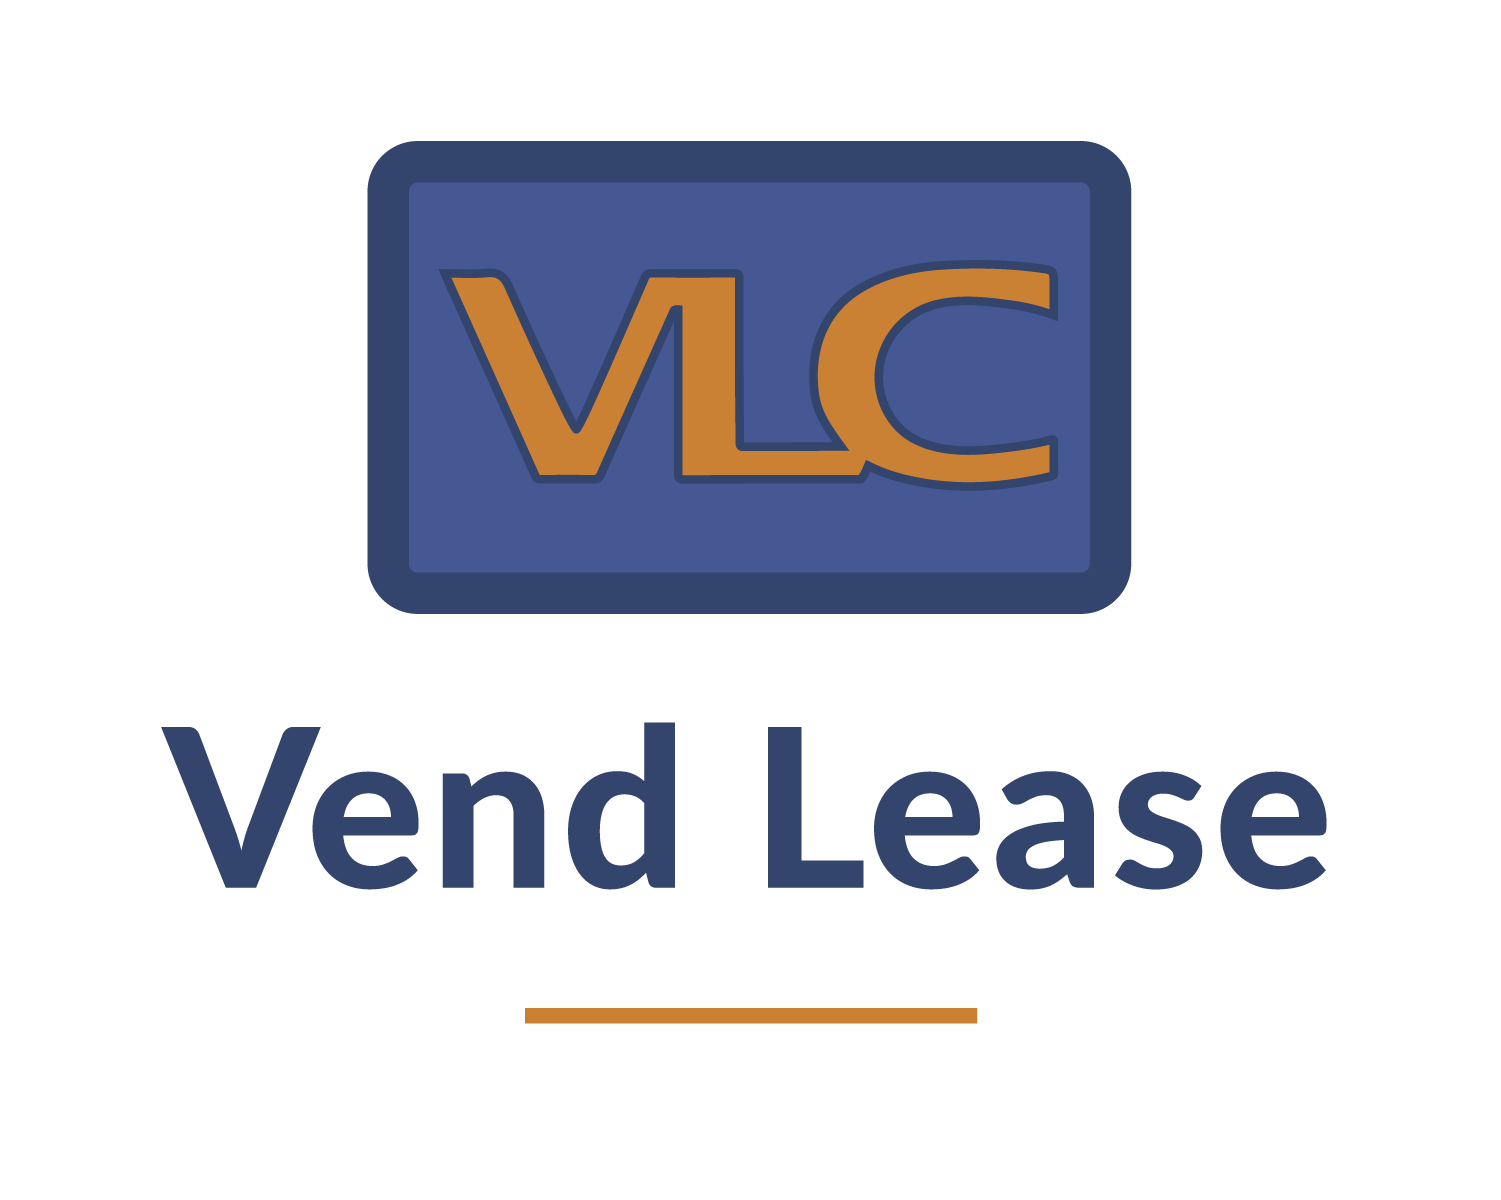 Vend lease